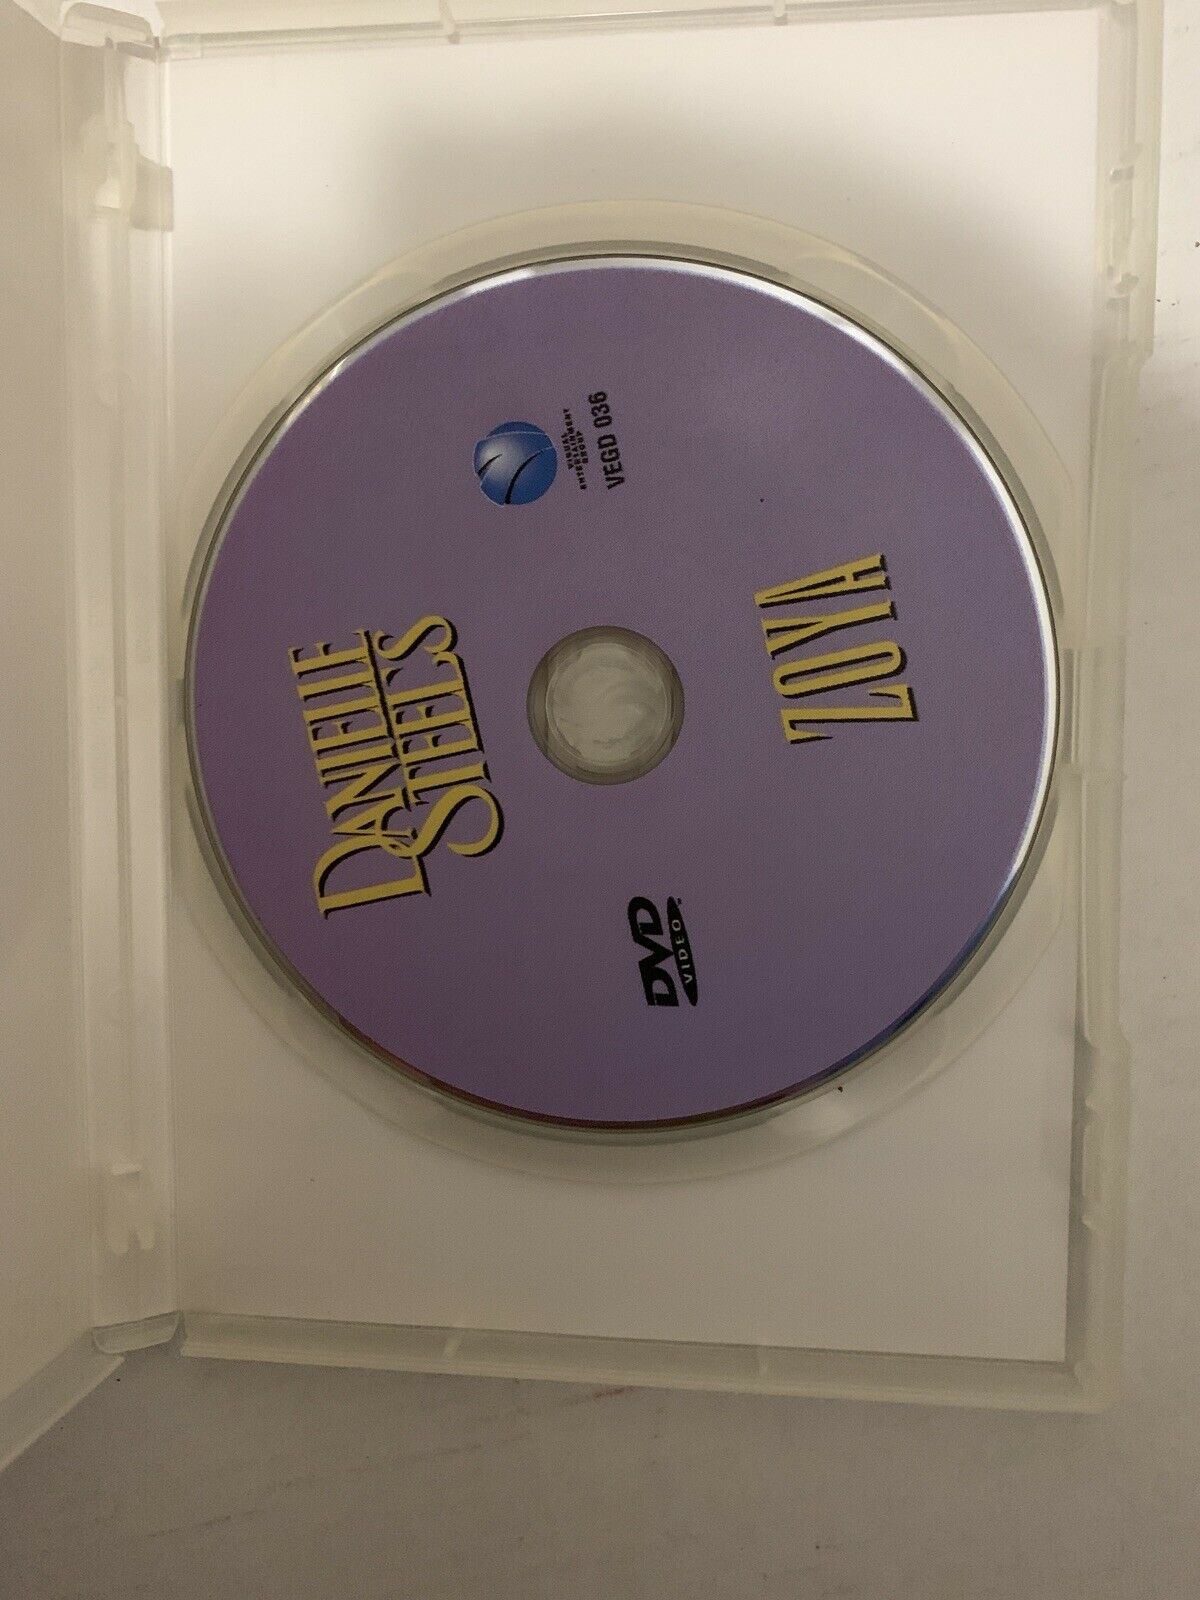 Danielle Steels - Zoya (DVD, 1995) NBC Melissa Gilbert All Regions